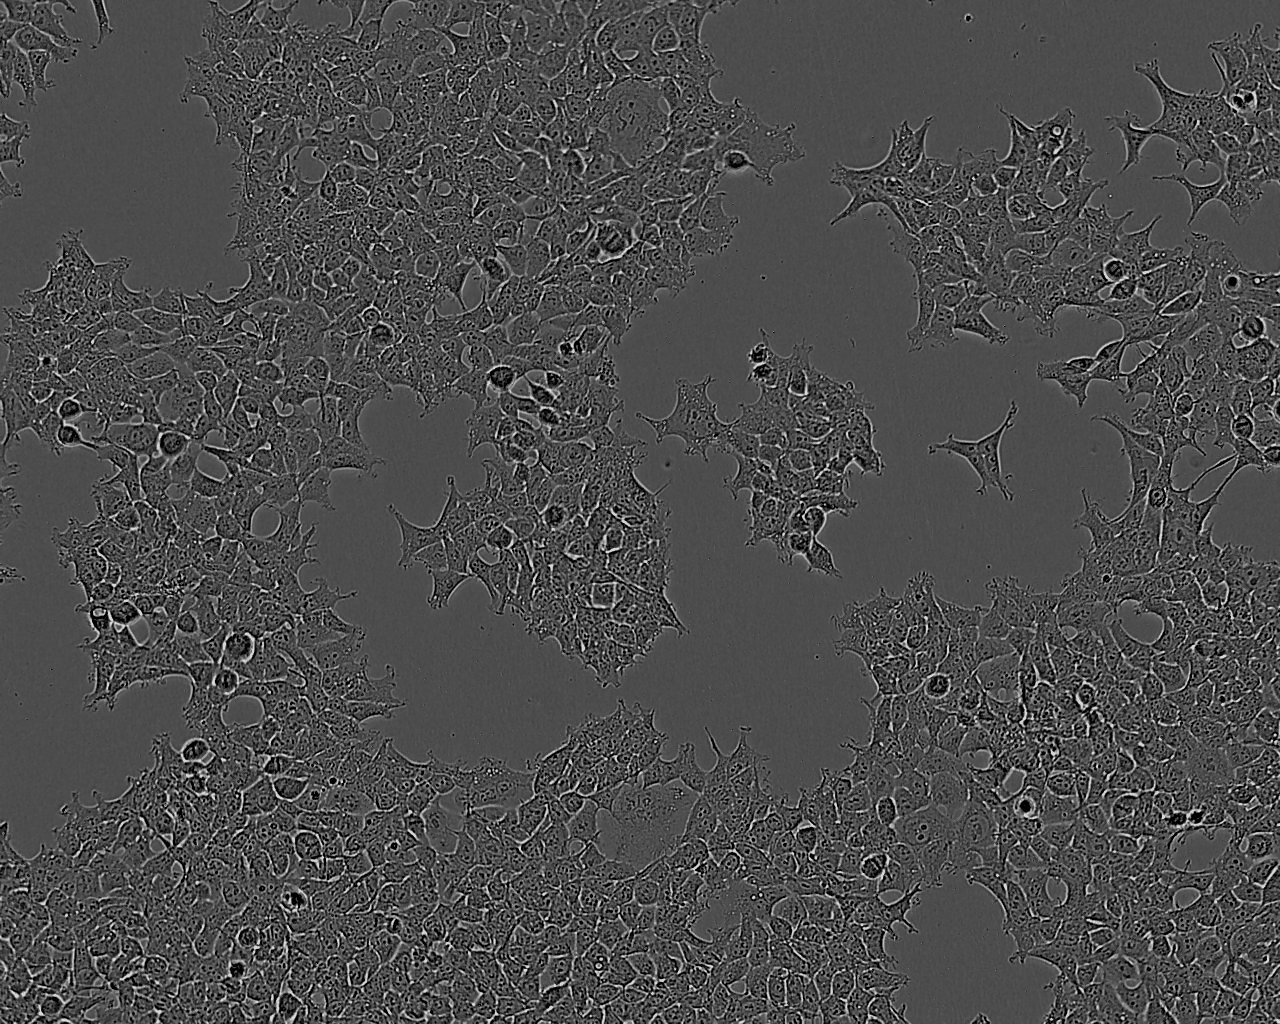 NCI-H1385 Cell:人肺癌细胞系